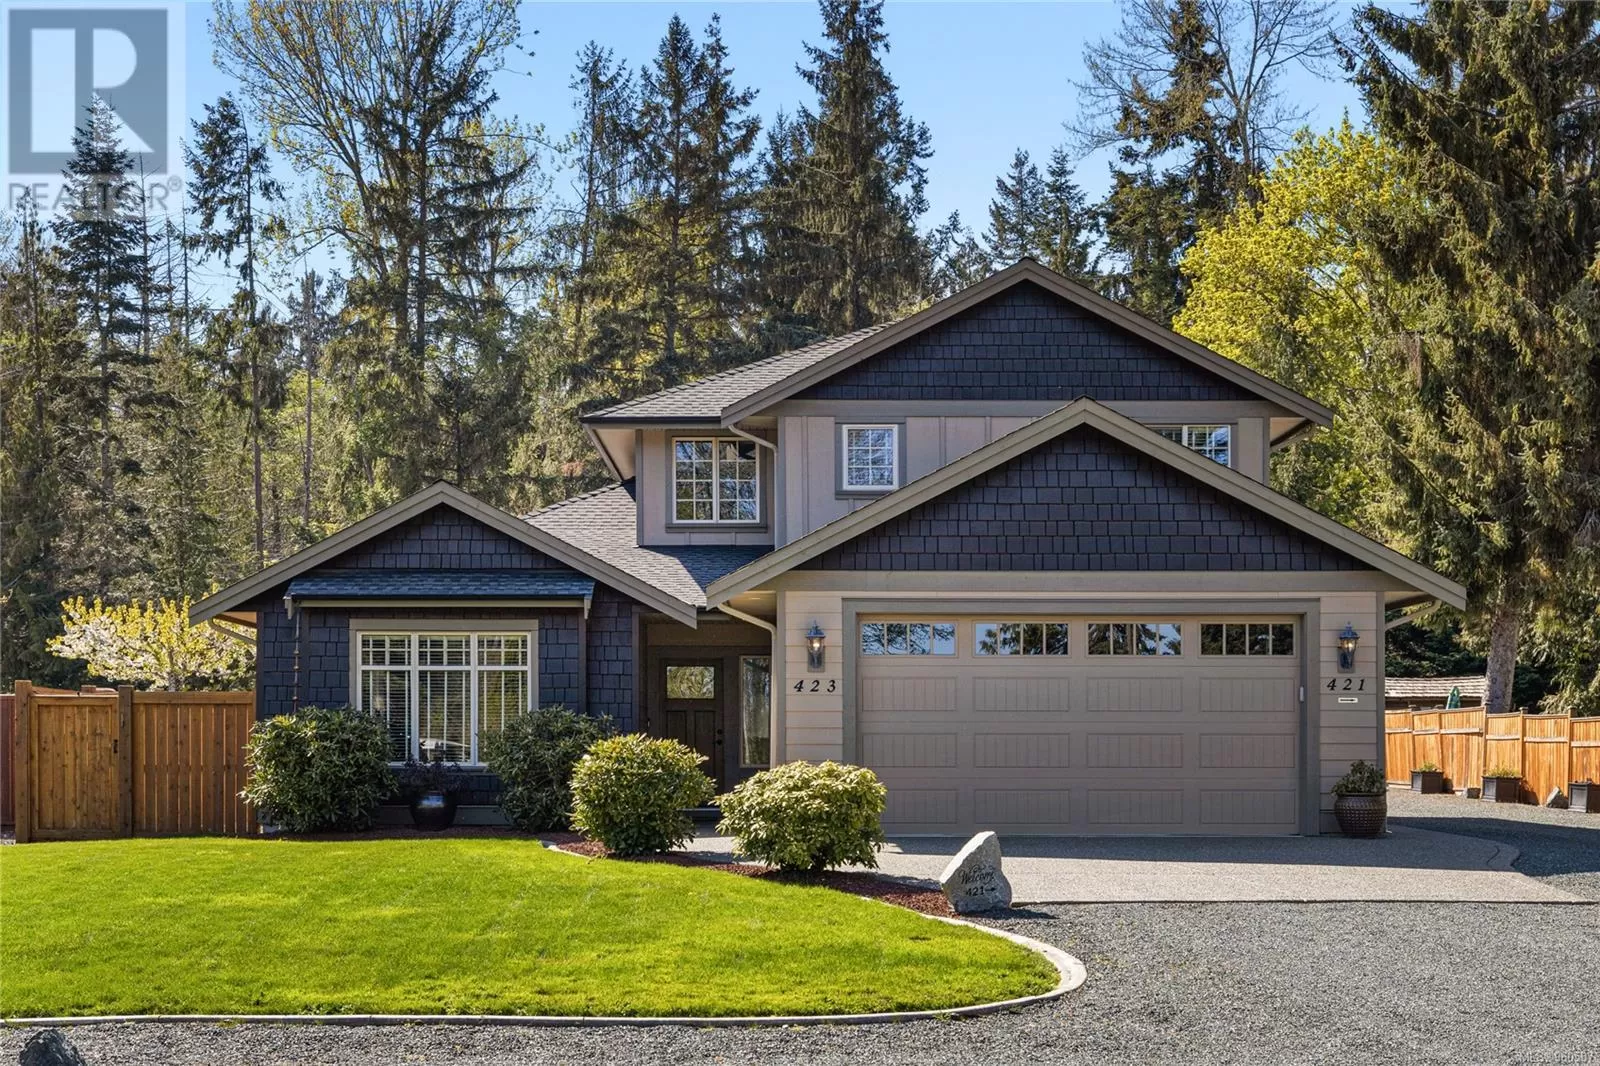 House for rent: 423 Craig St, Parksville, British Columbia V9P 1L2